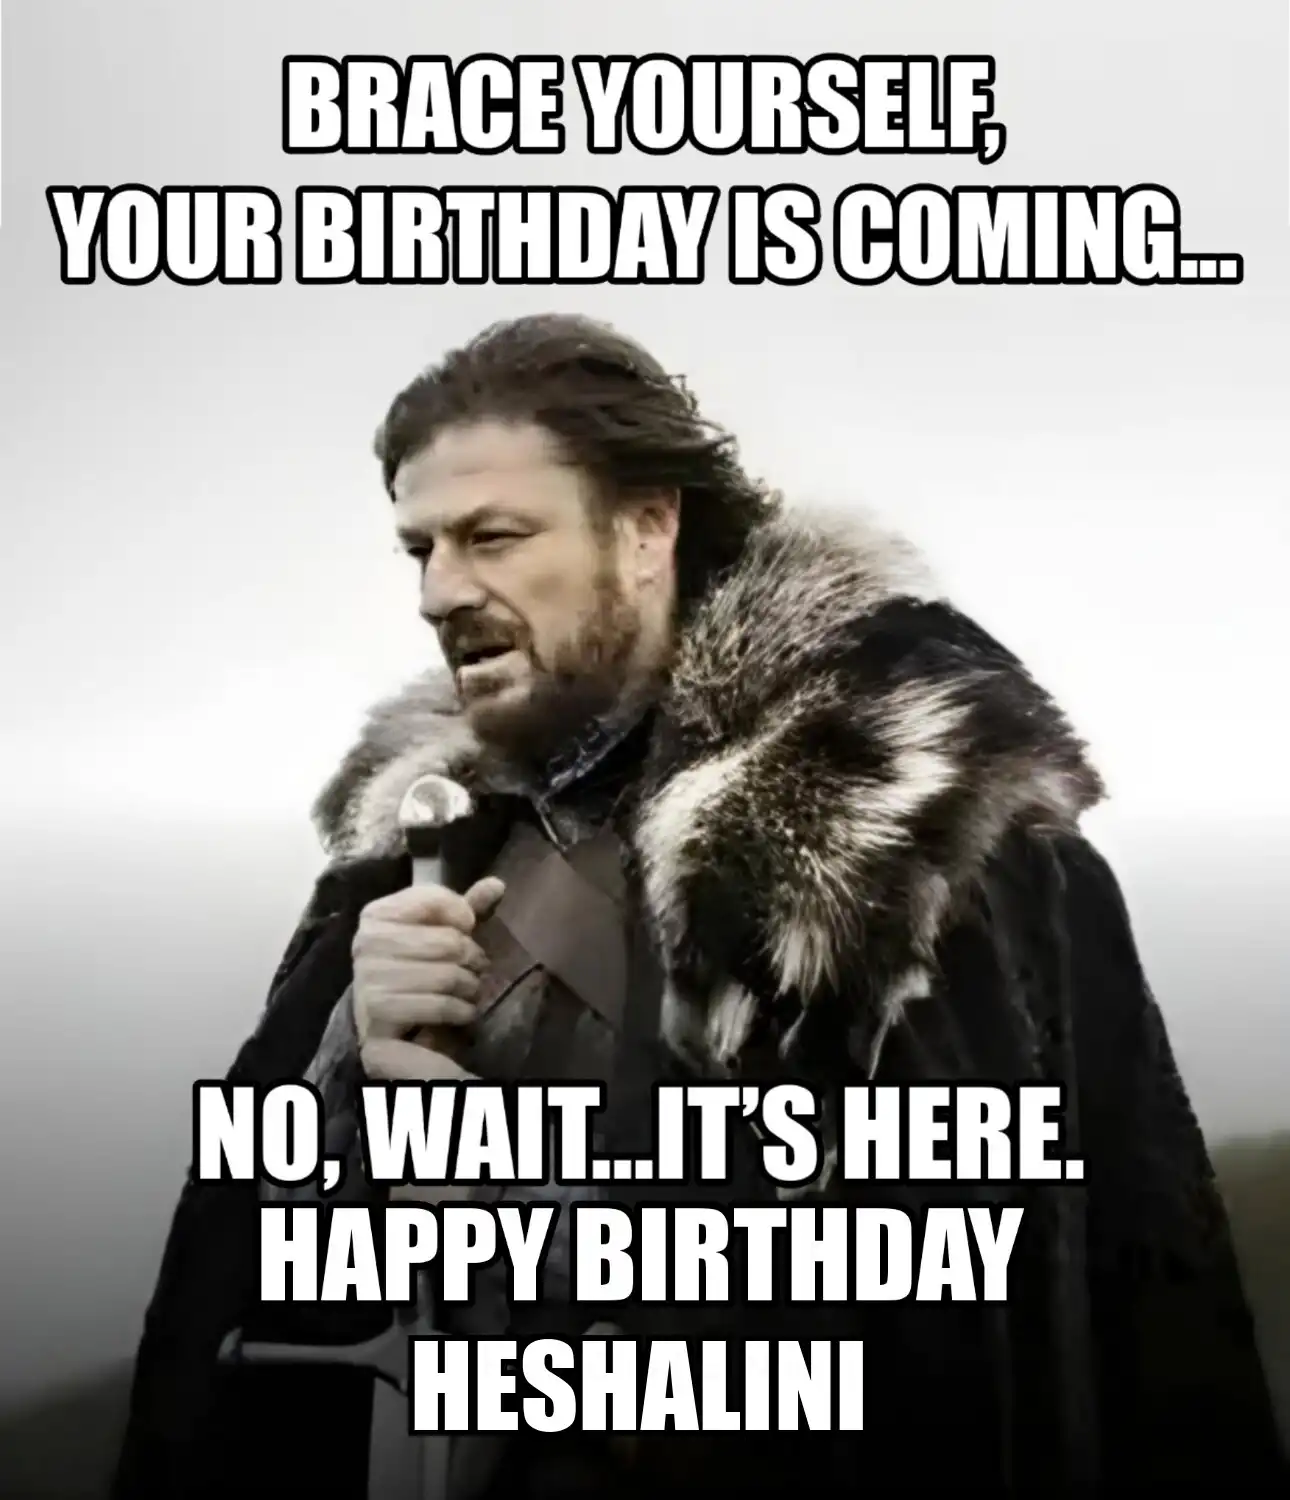 Happy Birthday Heshalini Brace Yourself Your Birthday Is Coming Meme